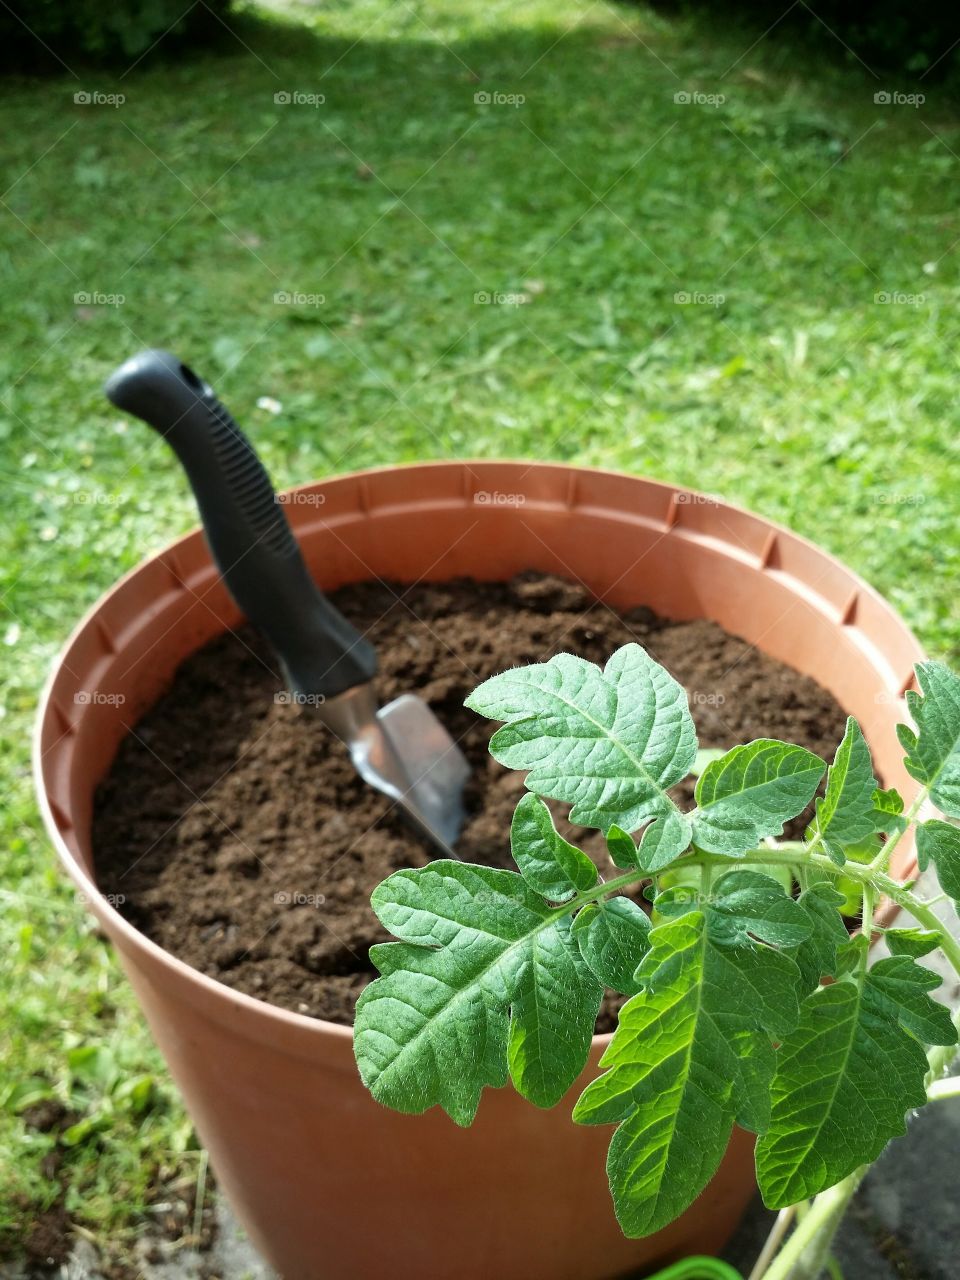 Gardening - Planting tomatoes